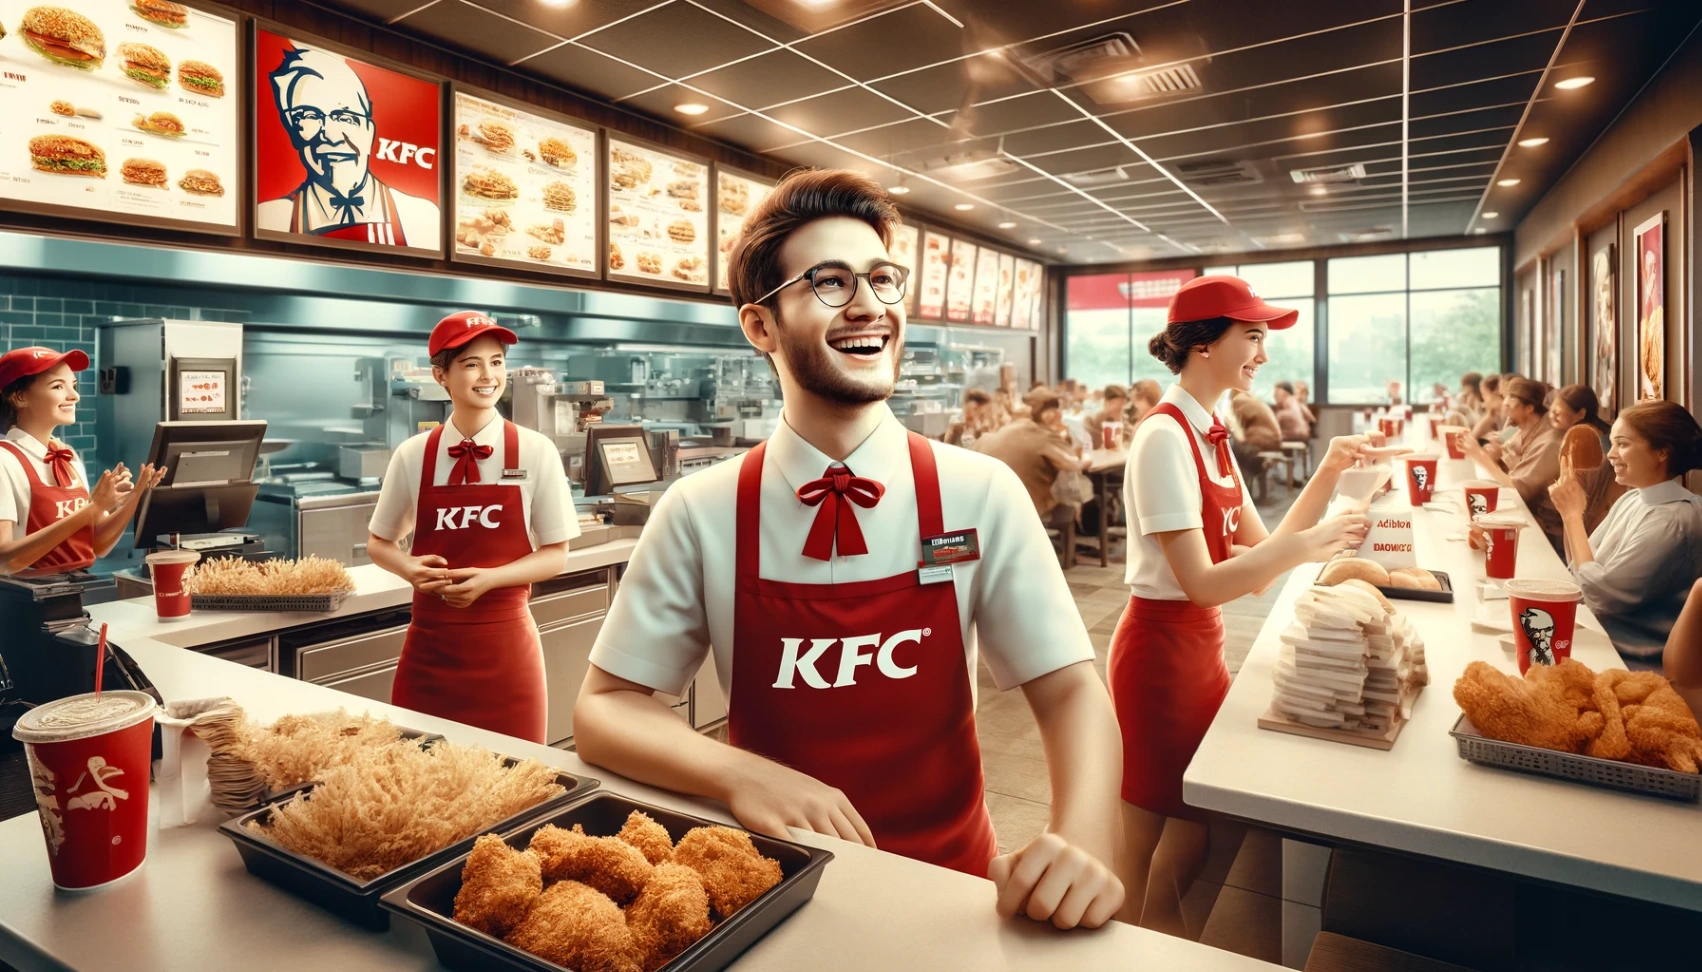 KFC - למדו כיצד להגיש מועמדות למשרות